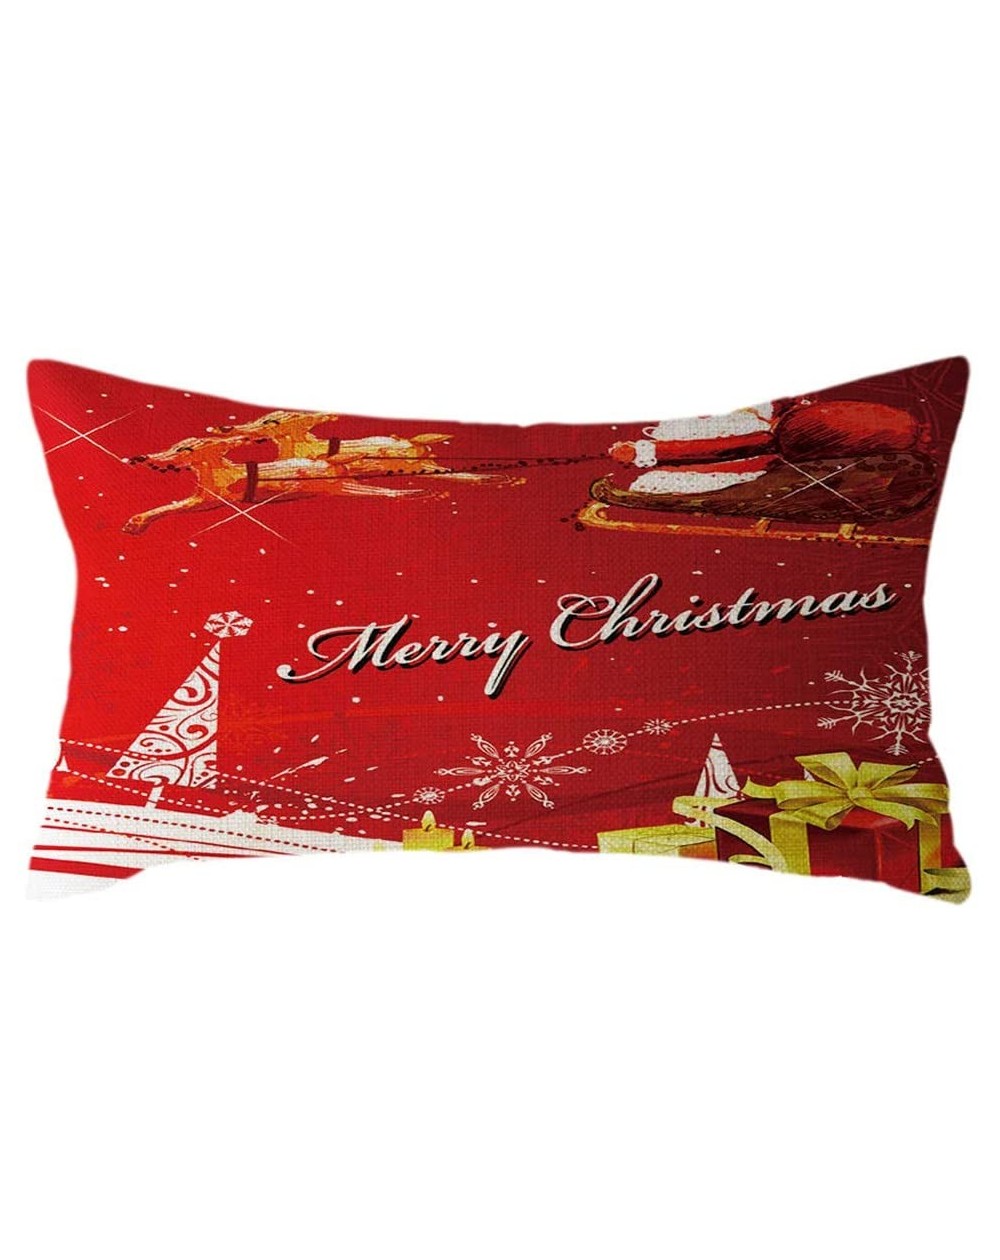 Swags Christmas Decor Tree Pillow Case Linen 30x50cm Throw Cushion Cover Home Decor- Christmas Ornaments Advent Calendar Pill...